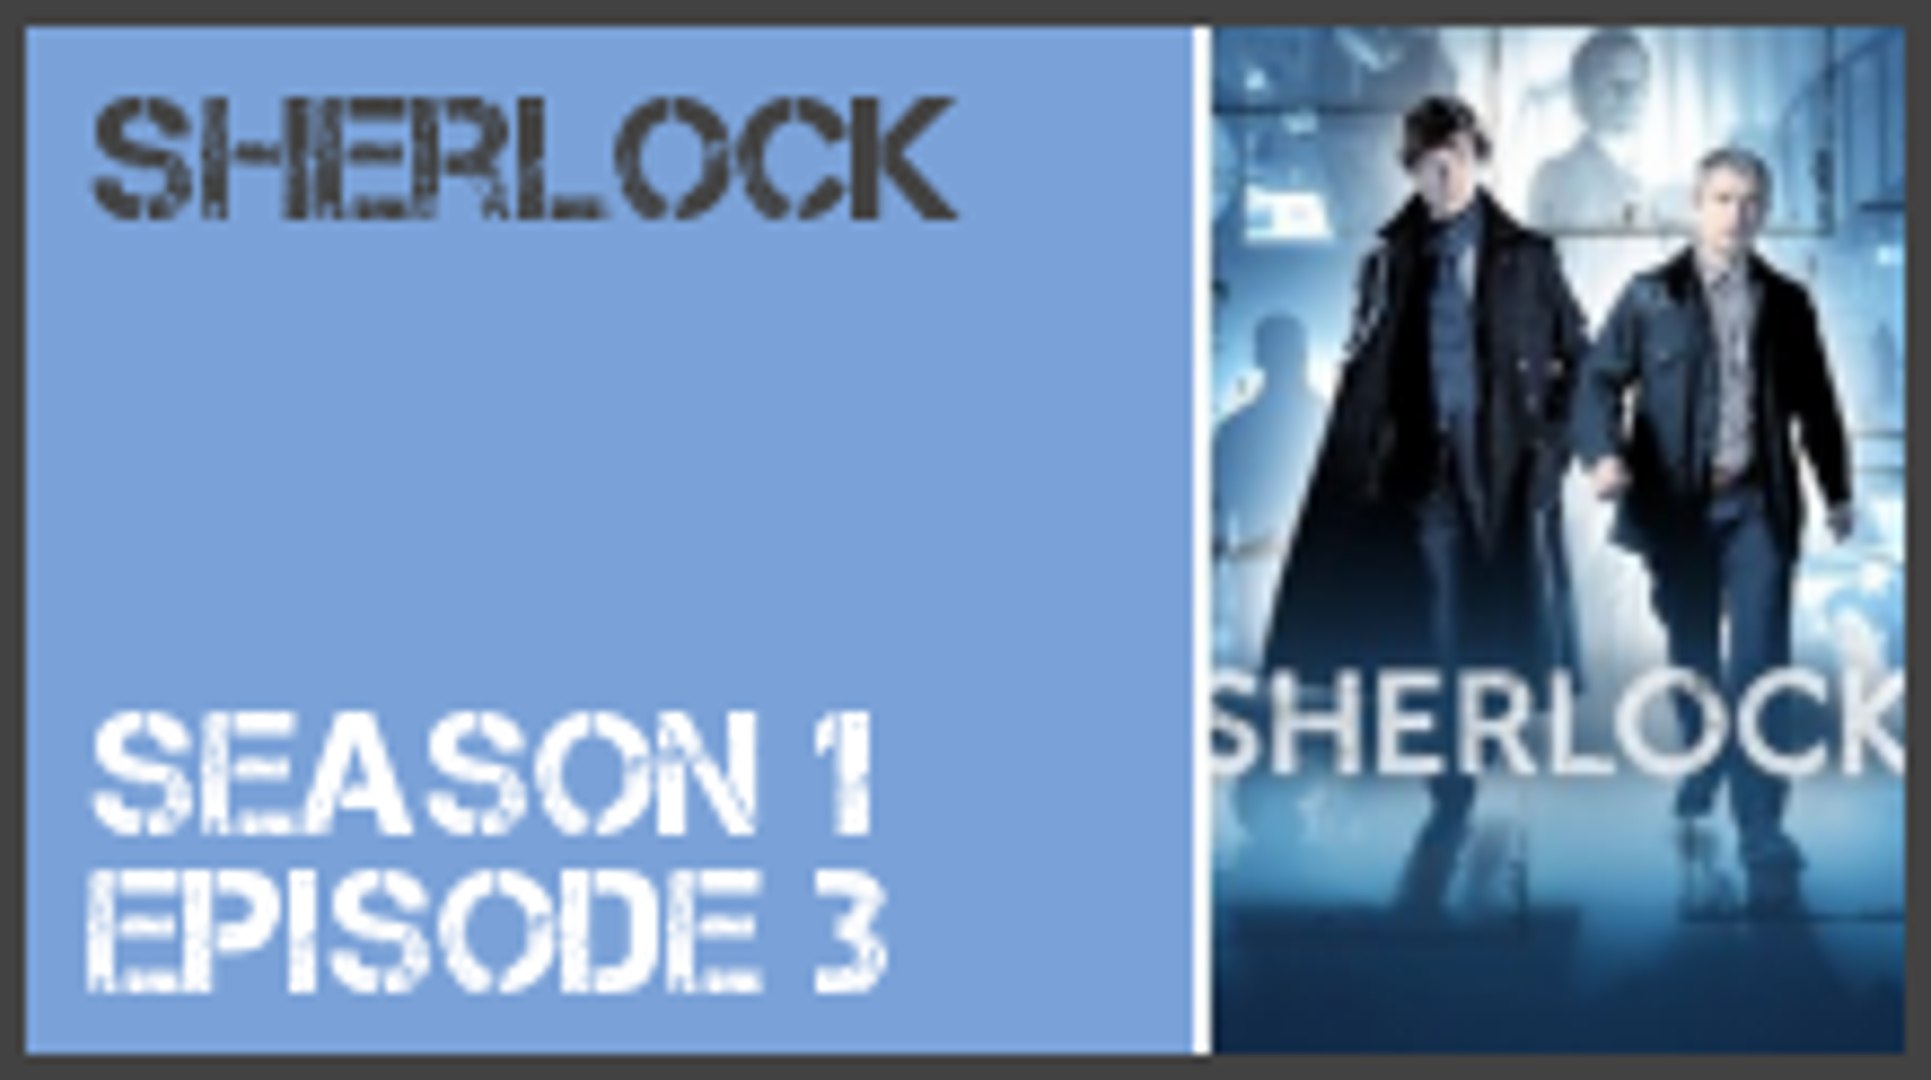 Download Sherlock Season 1 Episode 3 S1e3 Dailymotion Video SVG Cut Files